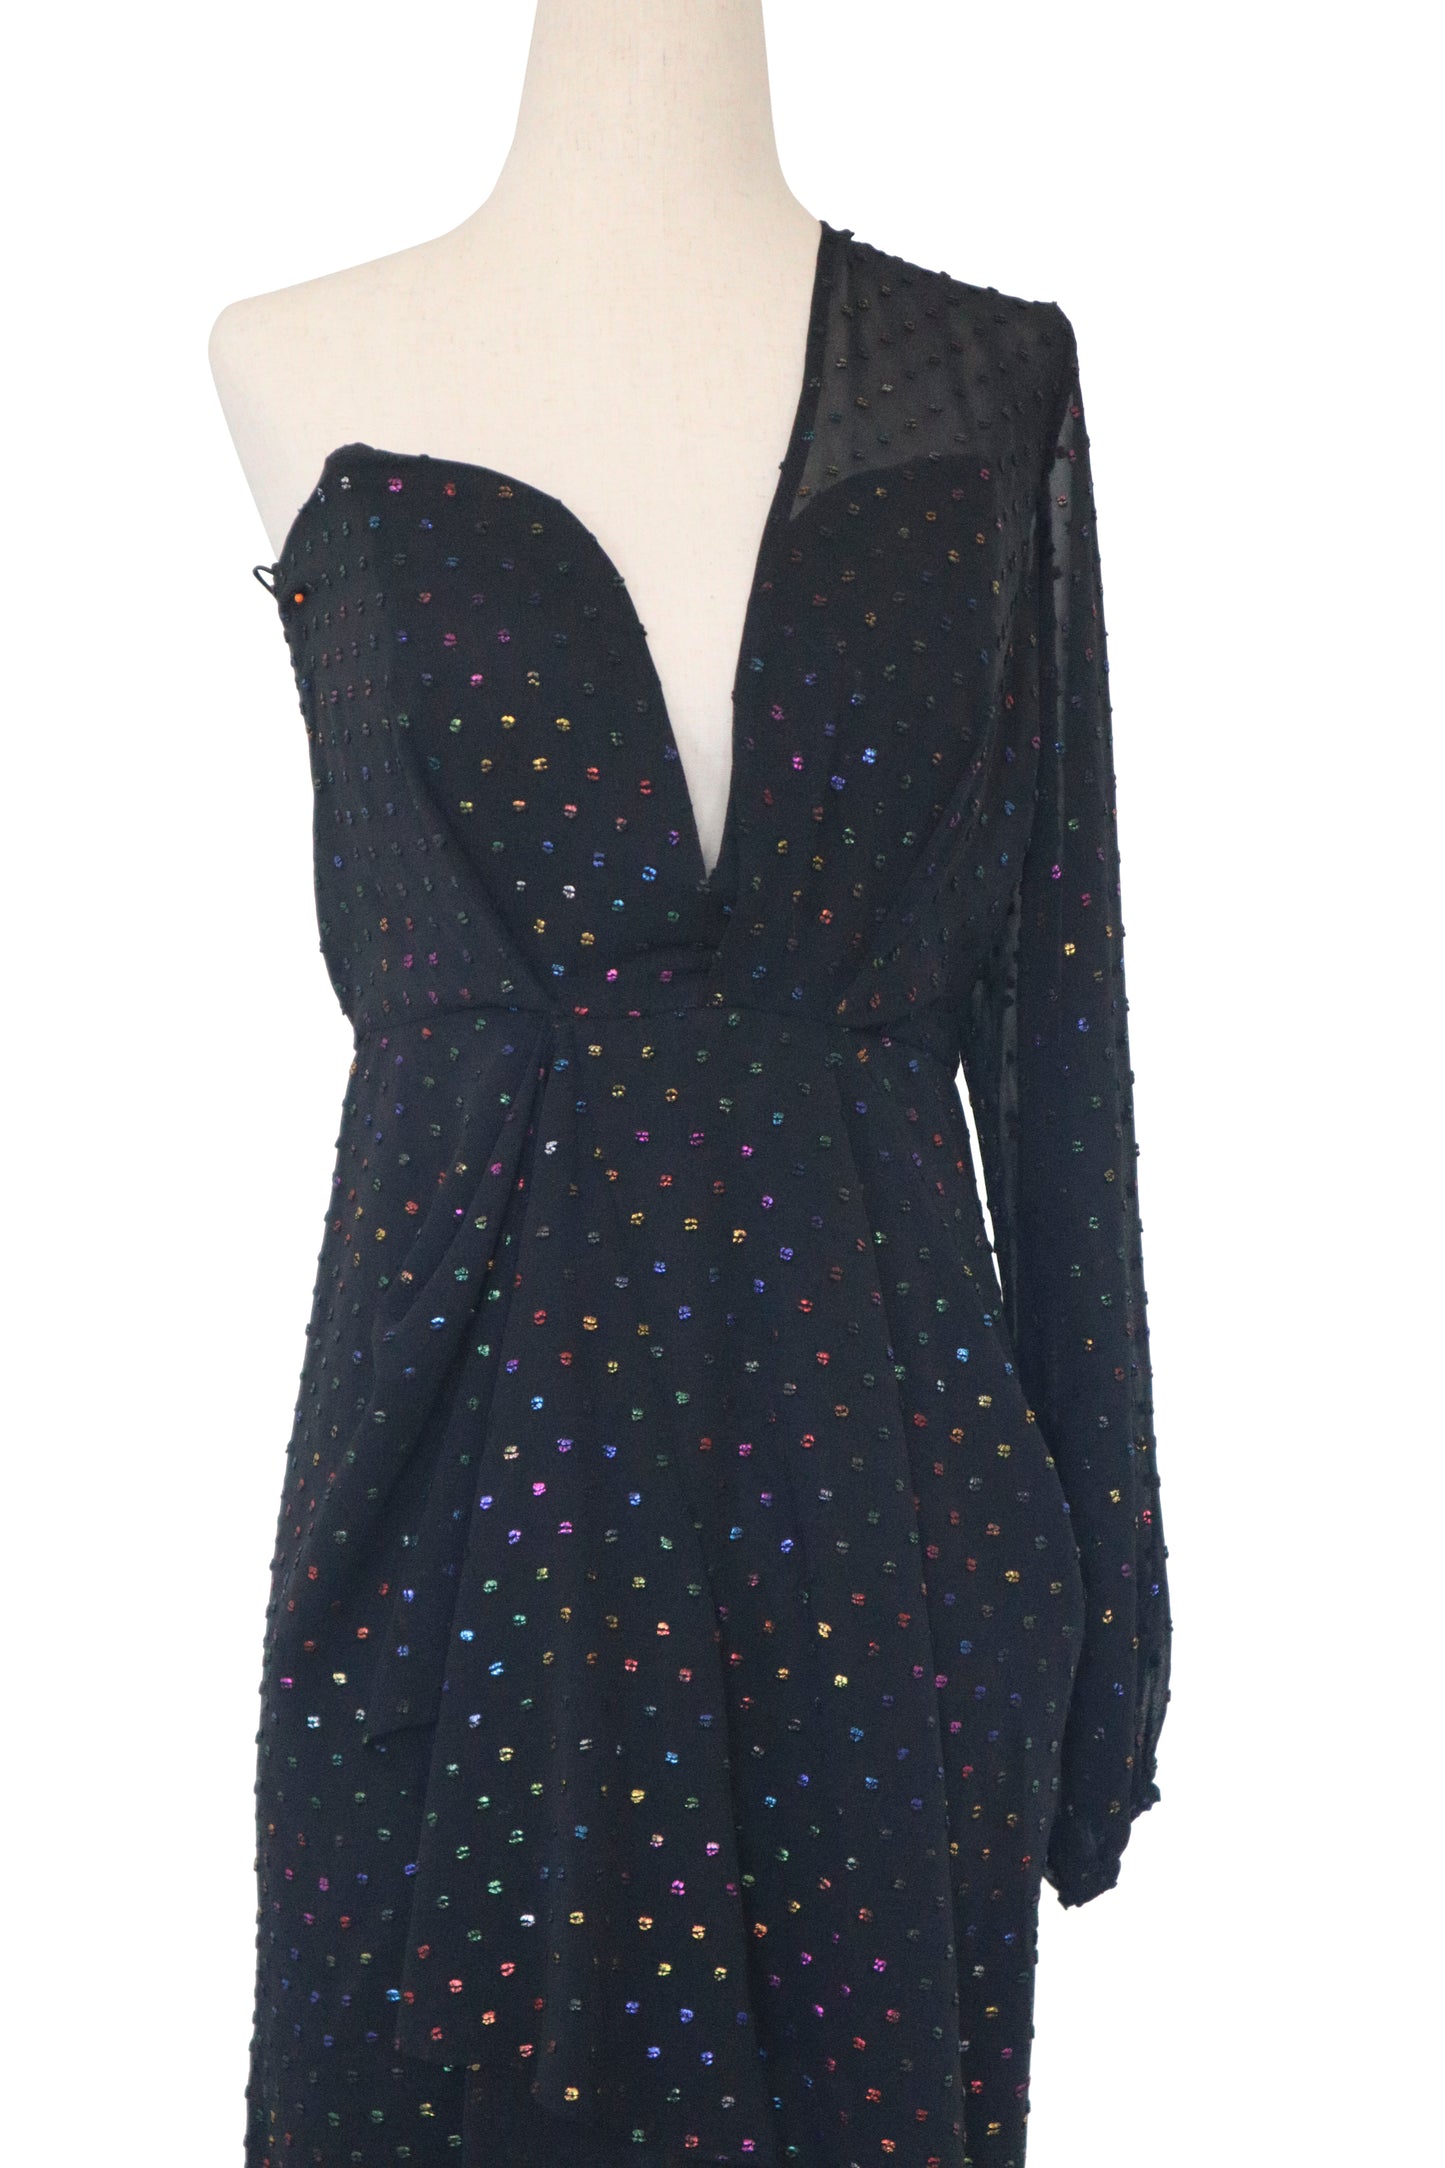 MICHELLE MASON - Black Mini Dress with Rainbow Sparkle W/ TAGS - US 2